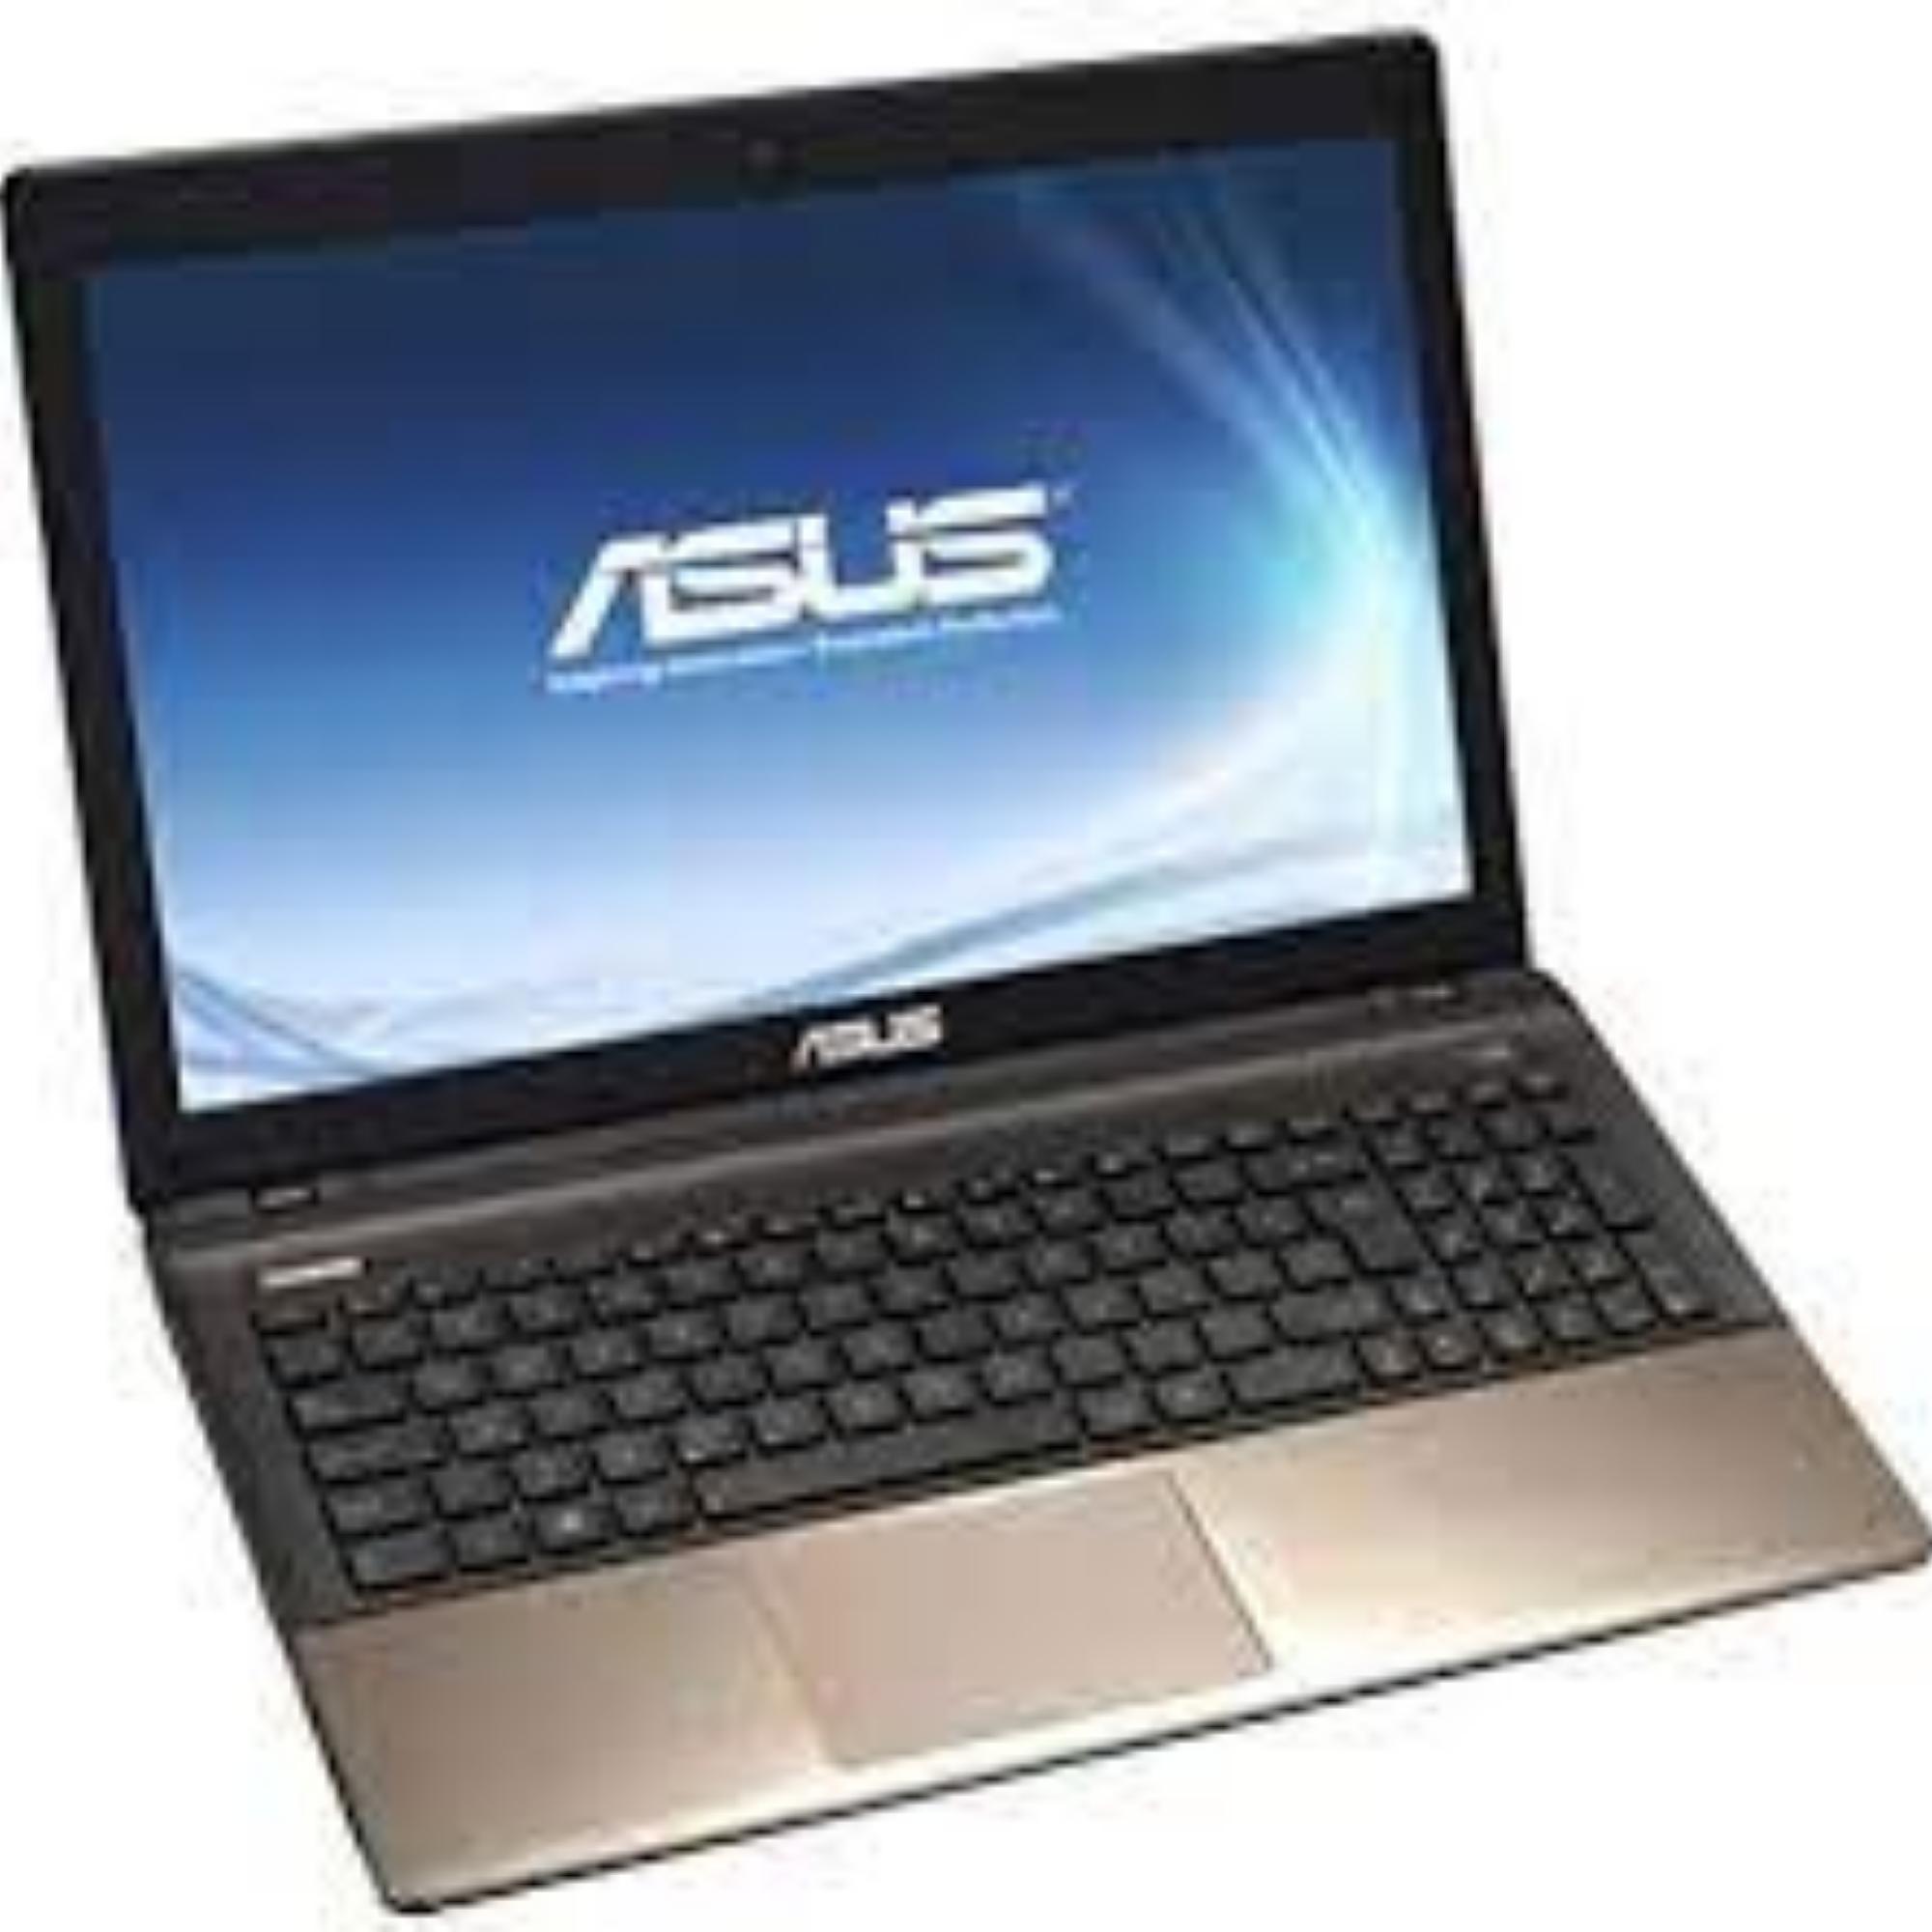 ASUS A55V / I7-3610QM / 120GB SSD / 8GB / 15.6″ / NVIDIA 610M 2GB / W10P